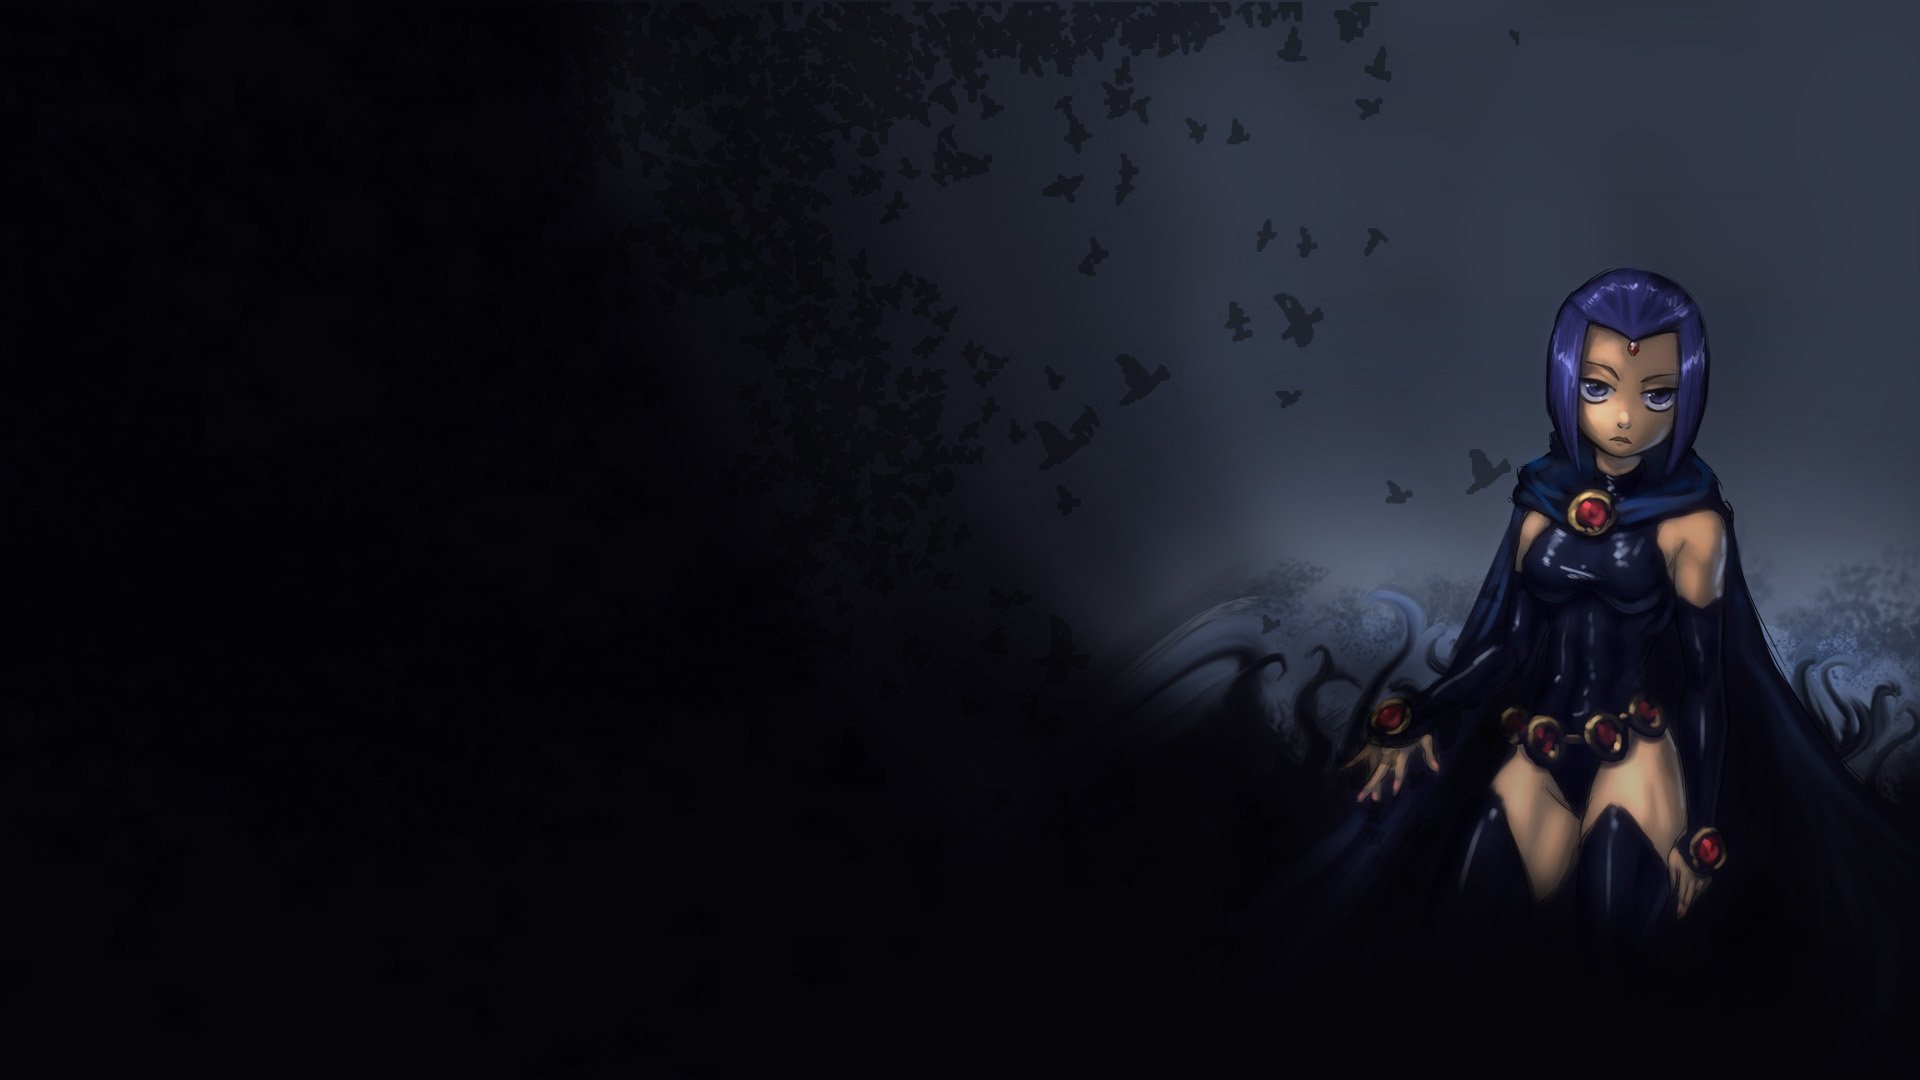 Teen Titans Raven character DC Comics wallpaper background